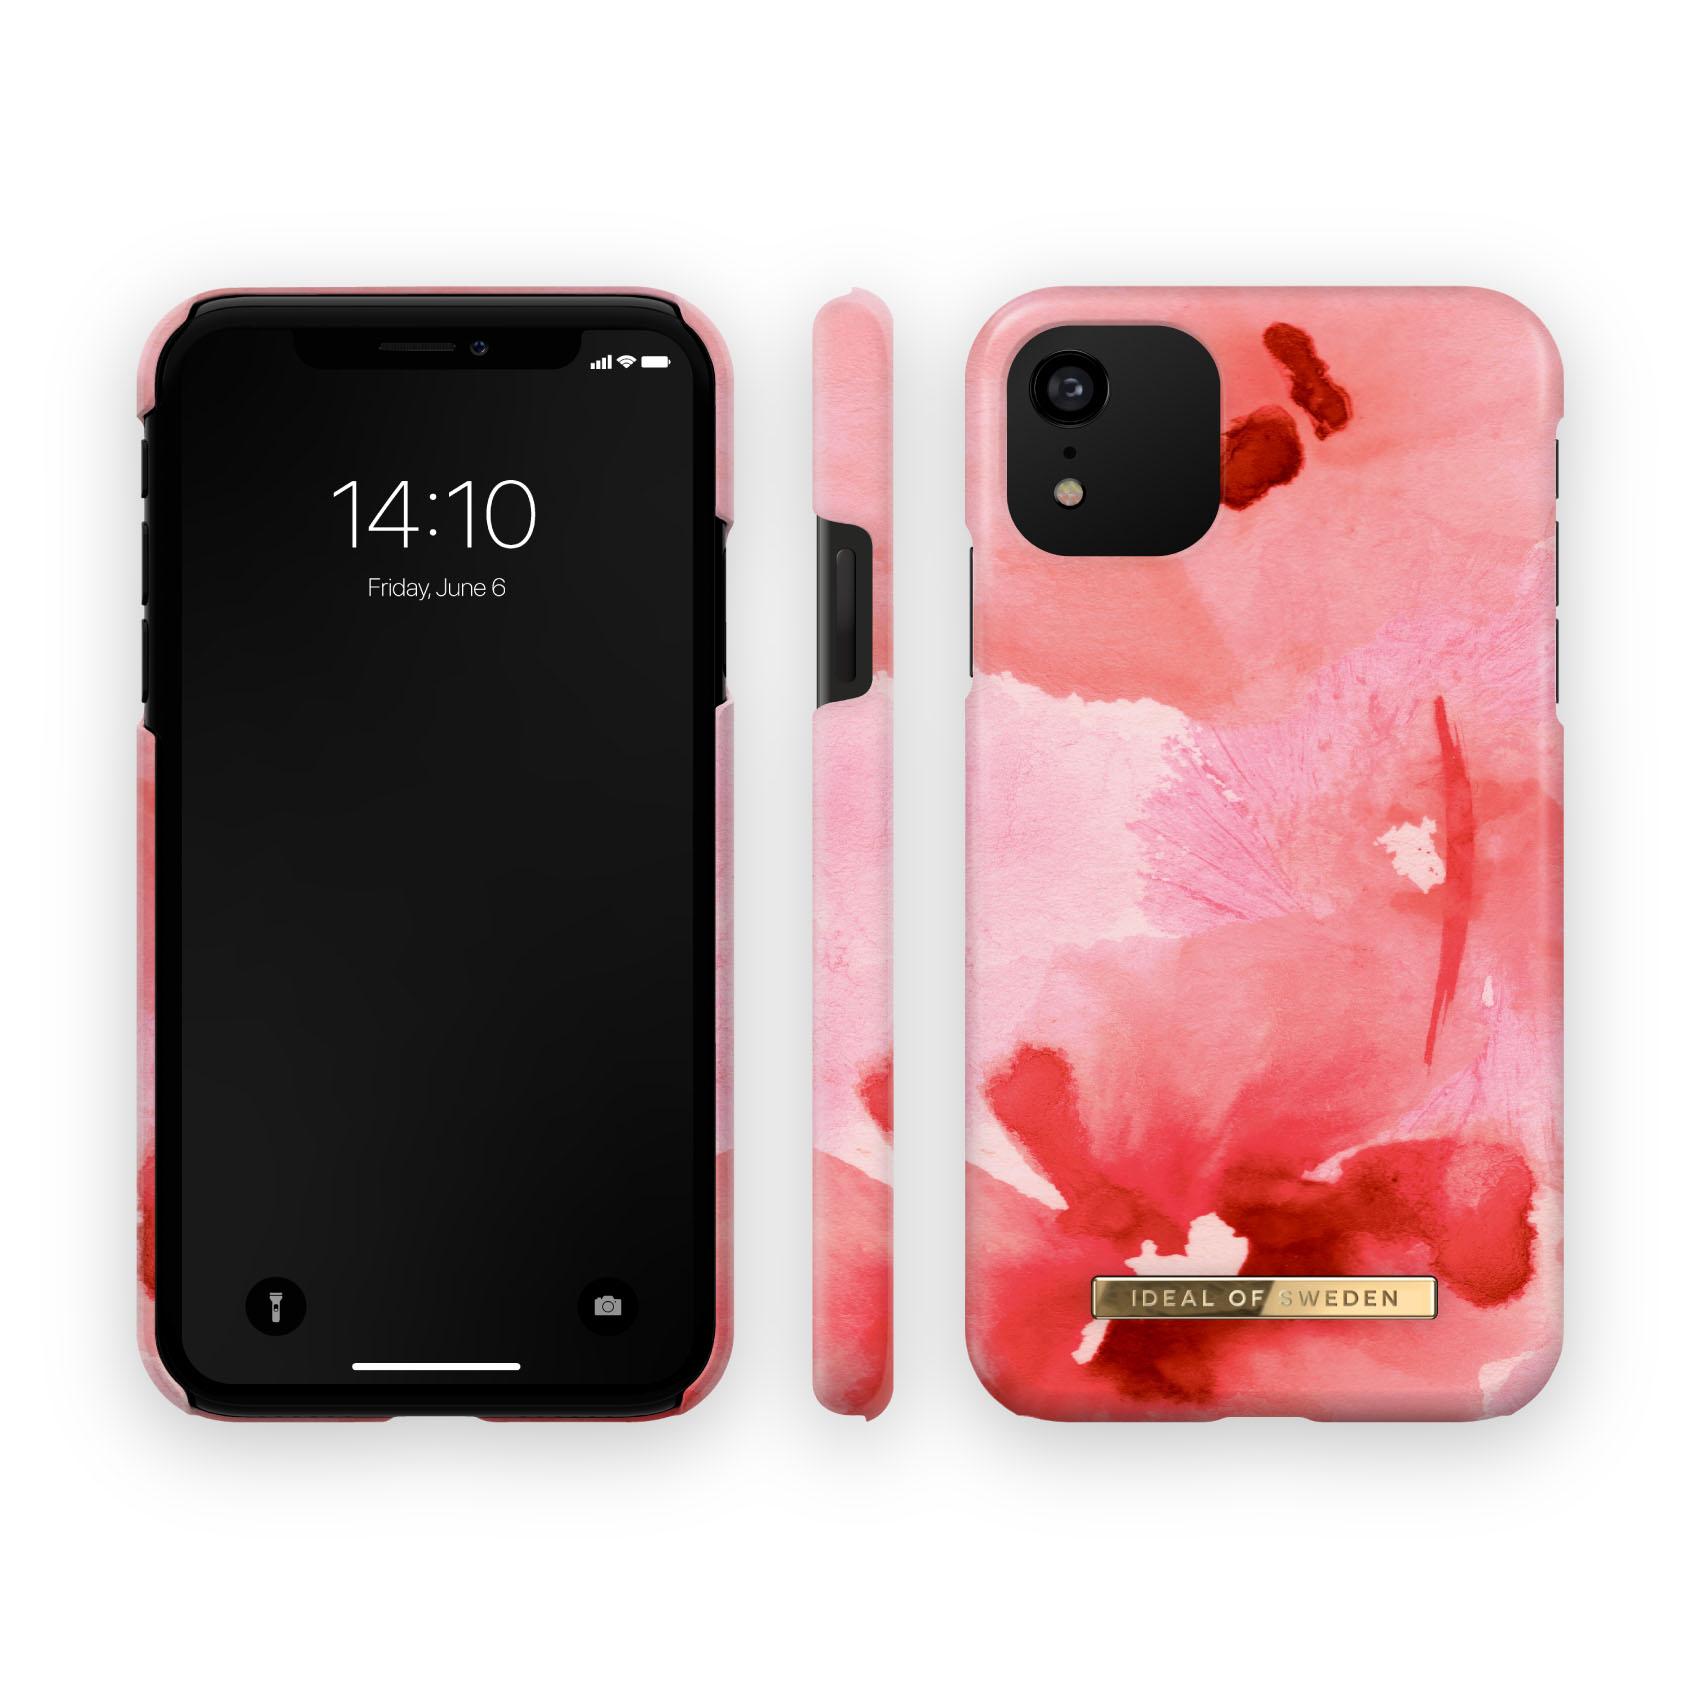 Fashion Case iPhone 11/XR Coral Blush Floral